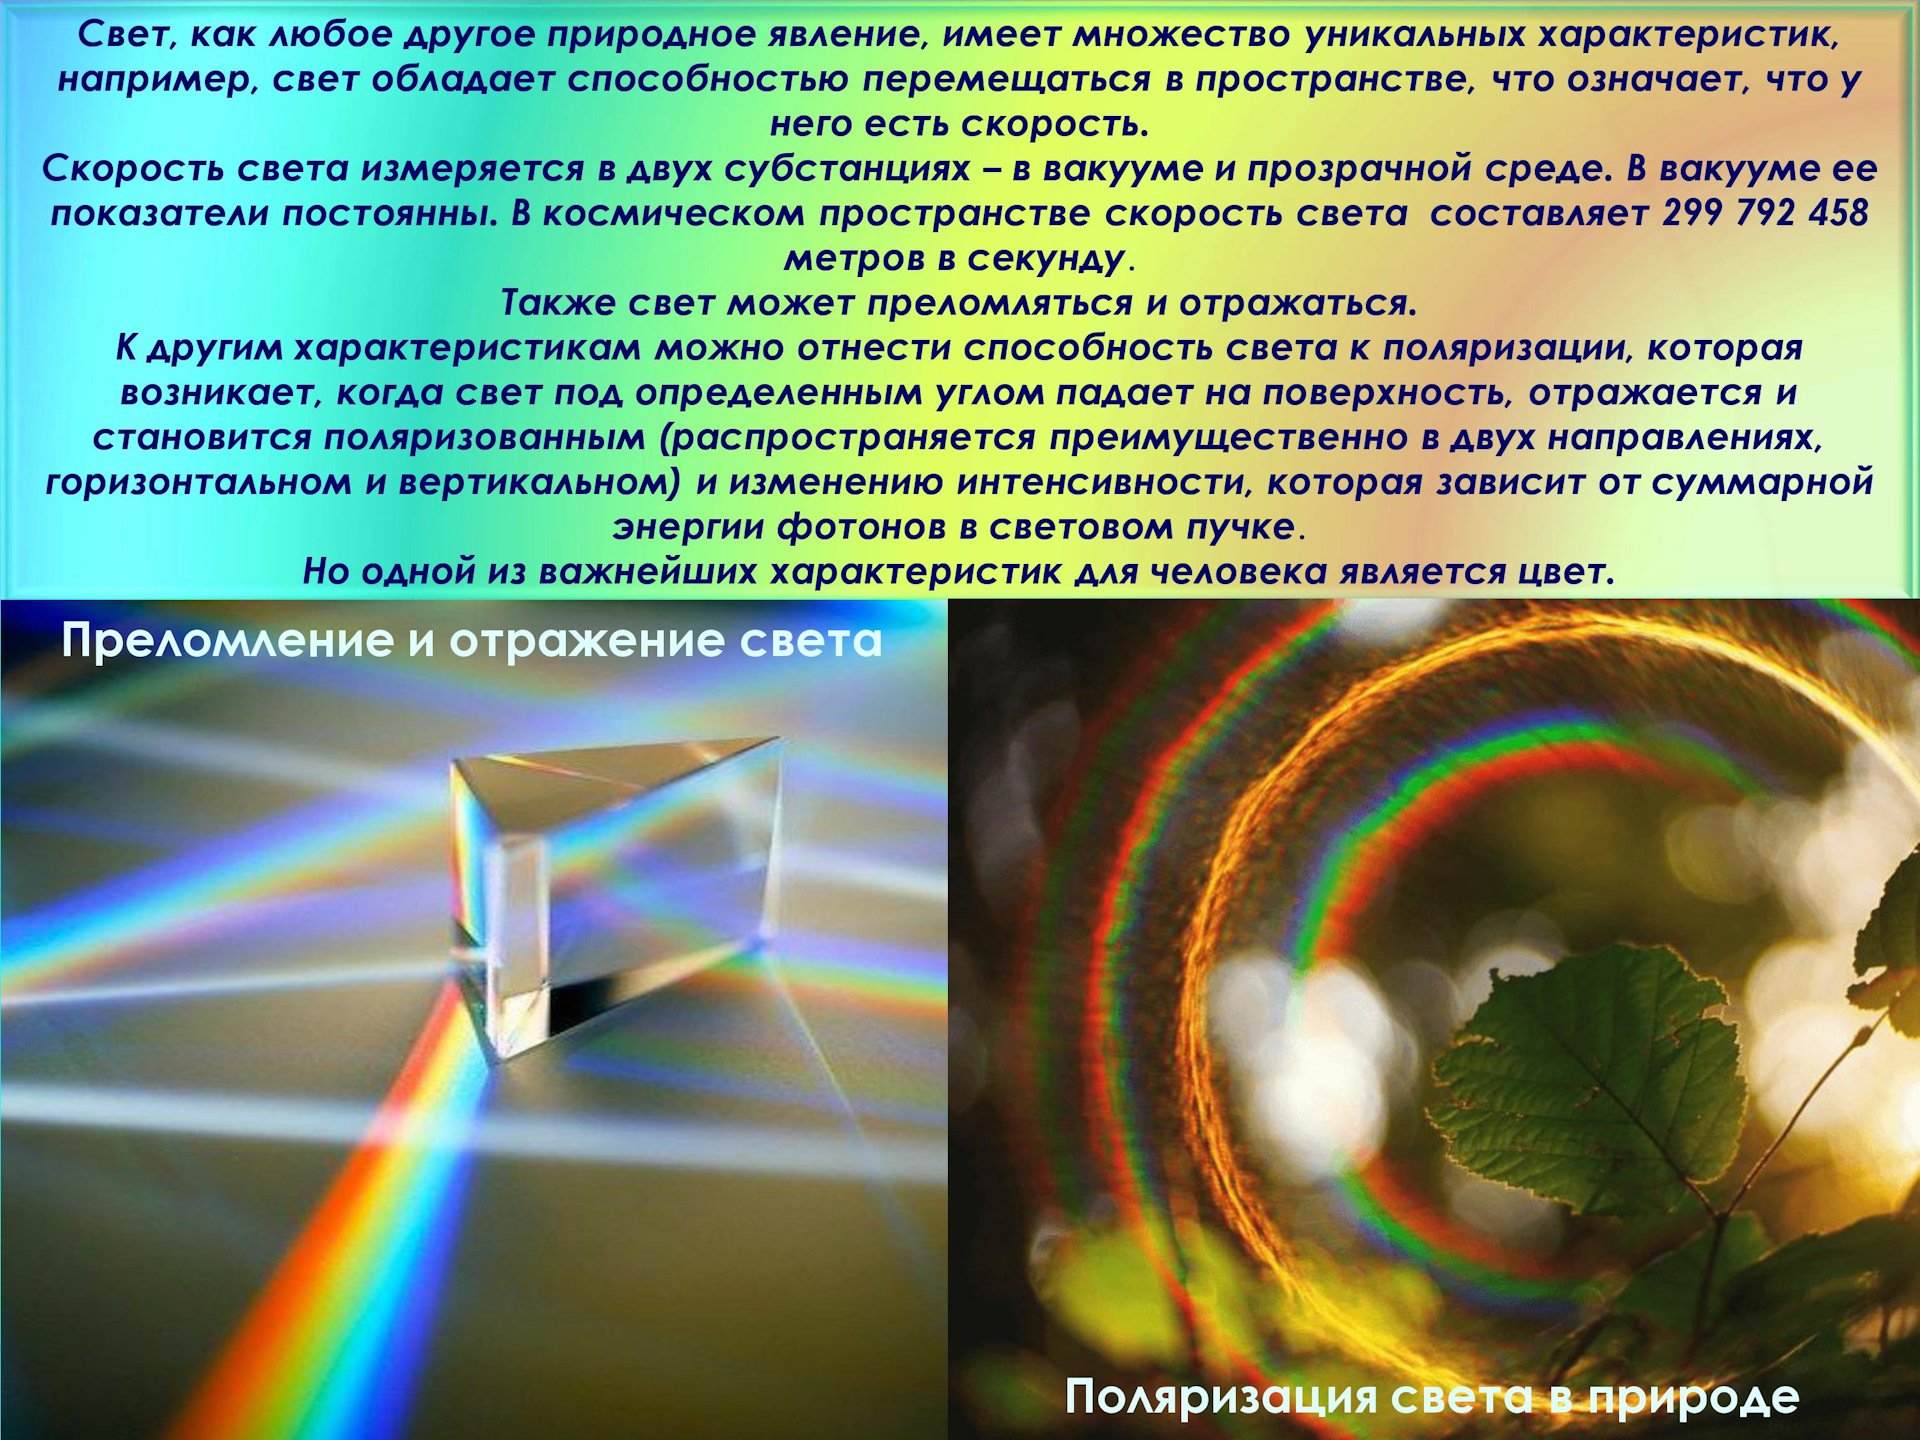 Электромагнитная природа света видеоурок. Физическая природа света. Природа света физика. Поляризация света в природе. Электромагнитная природа света.